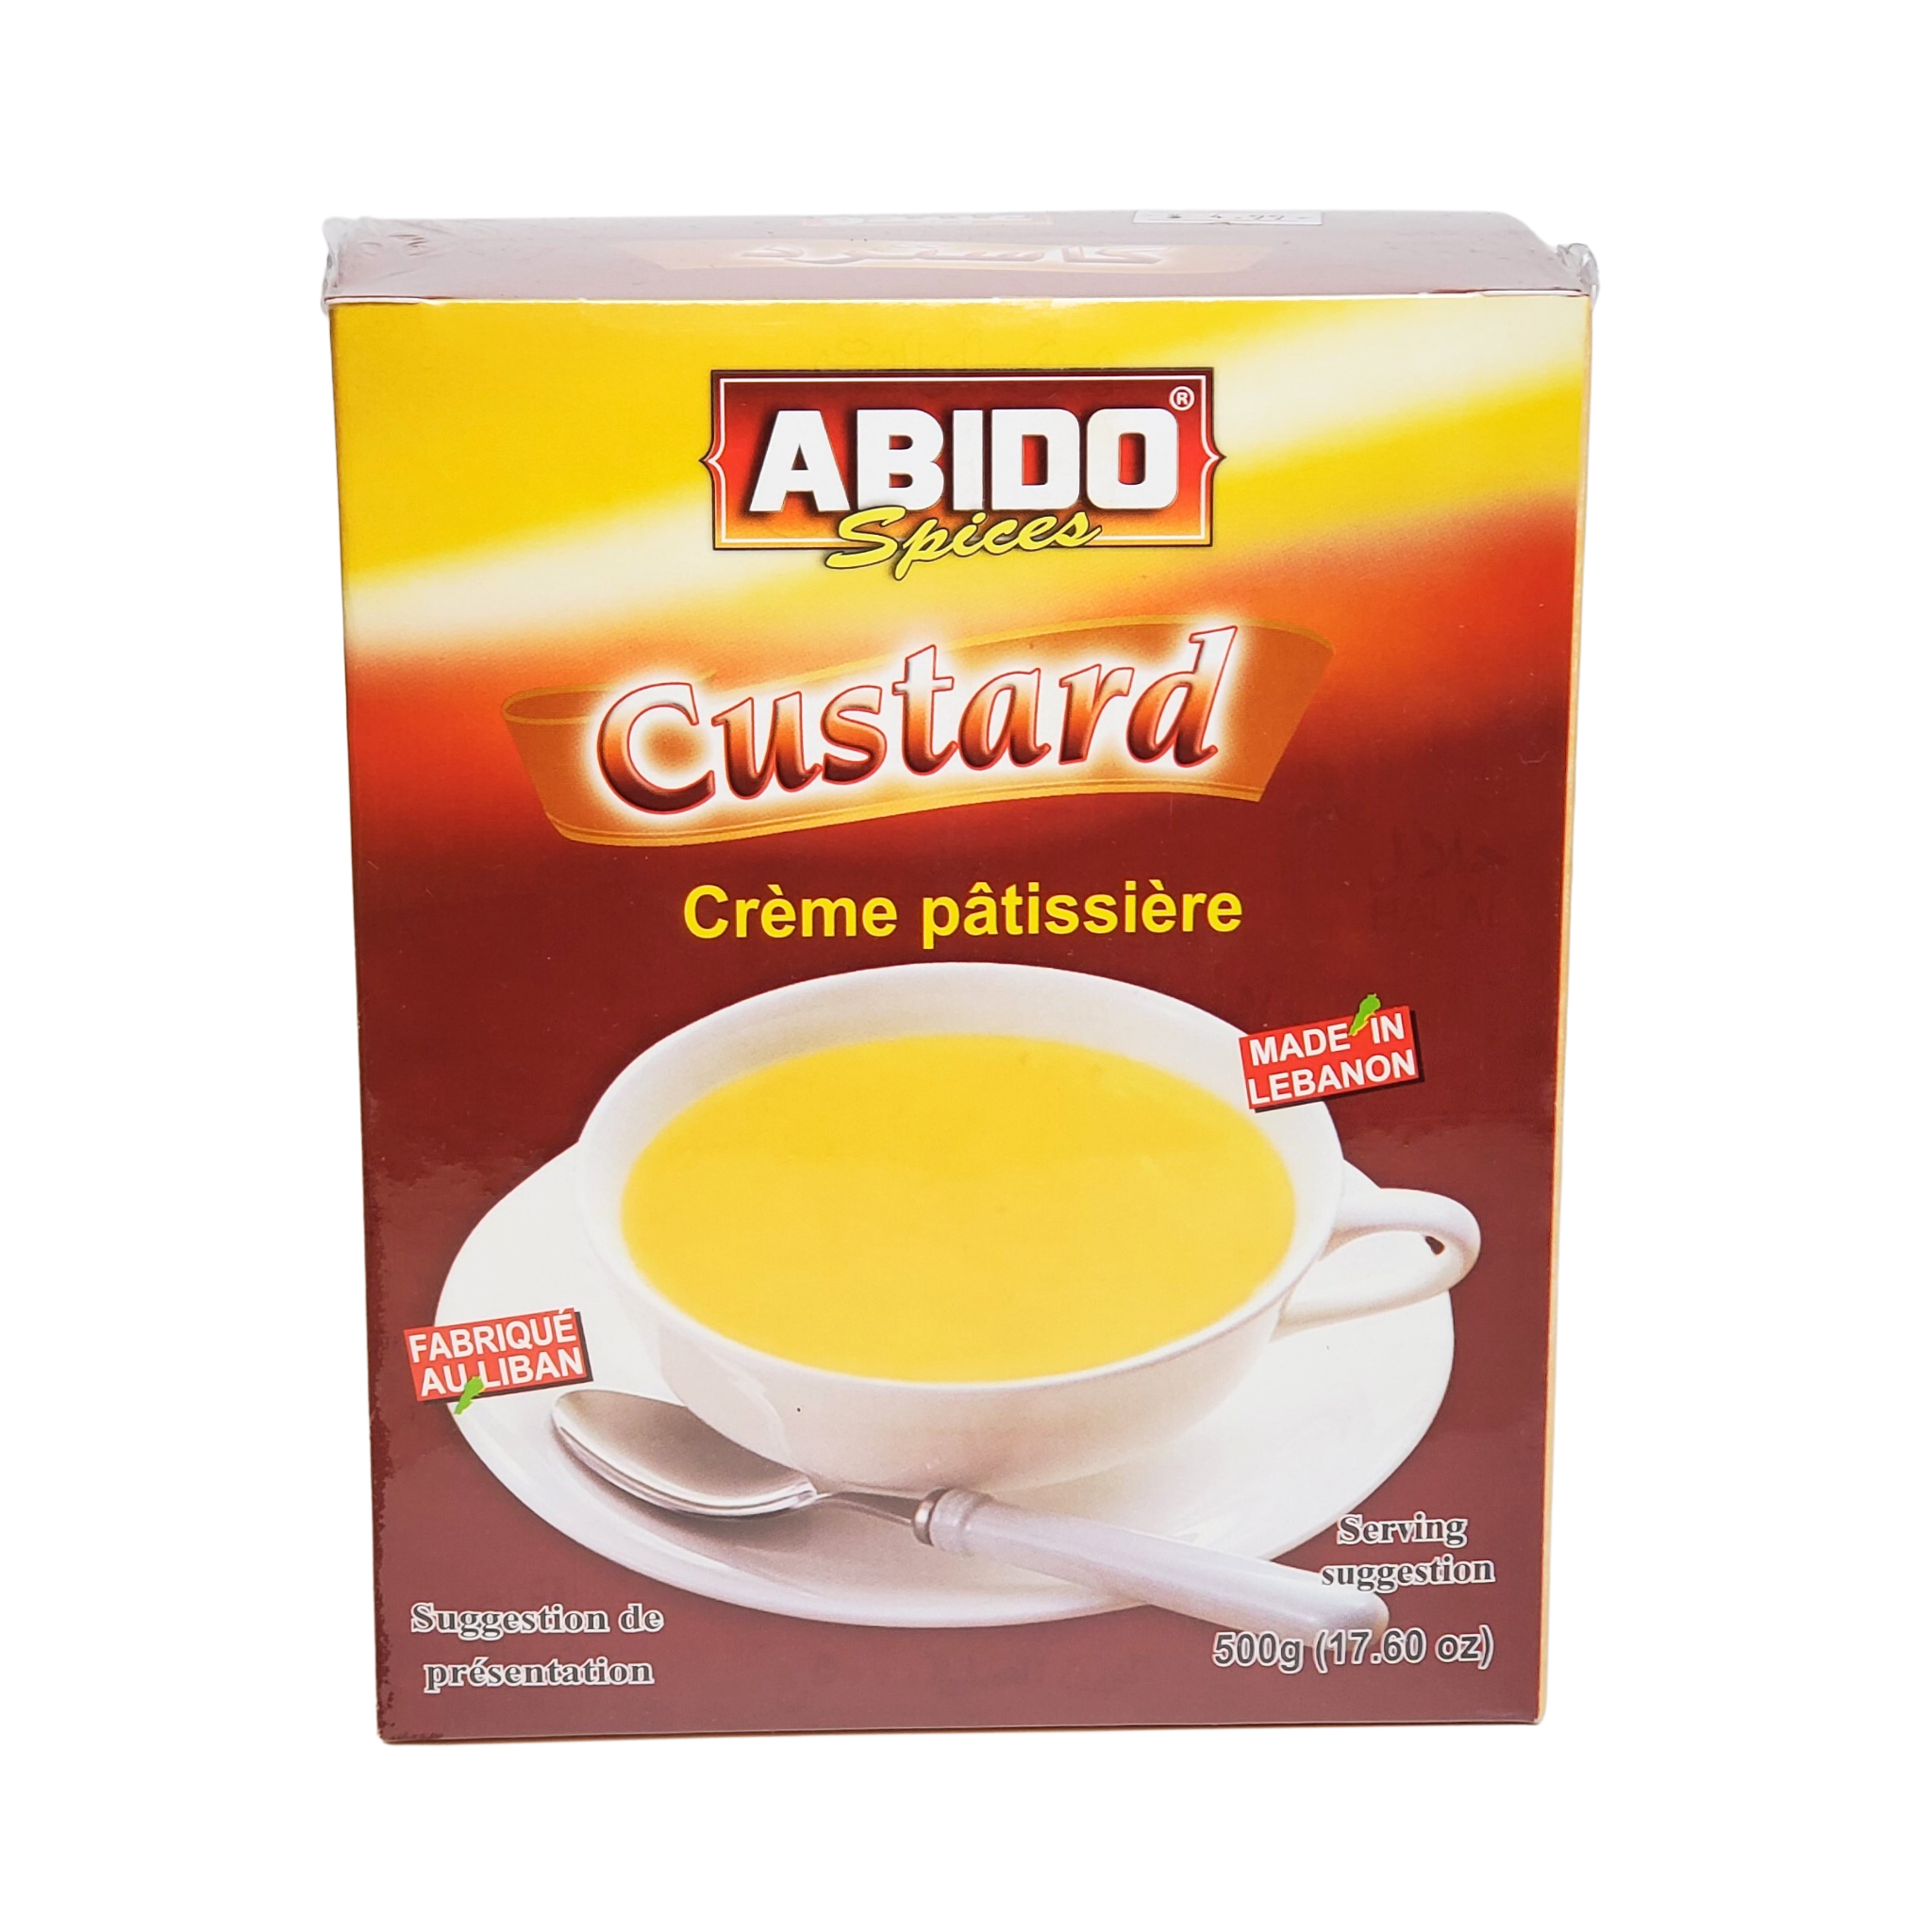 ABIDO spices Custard 500g